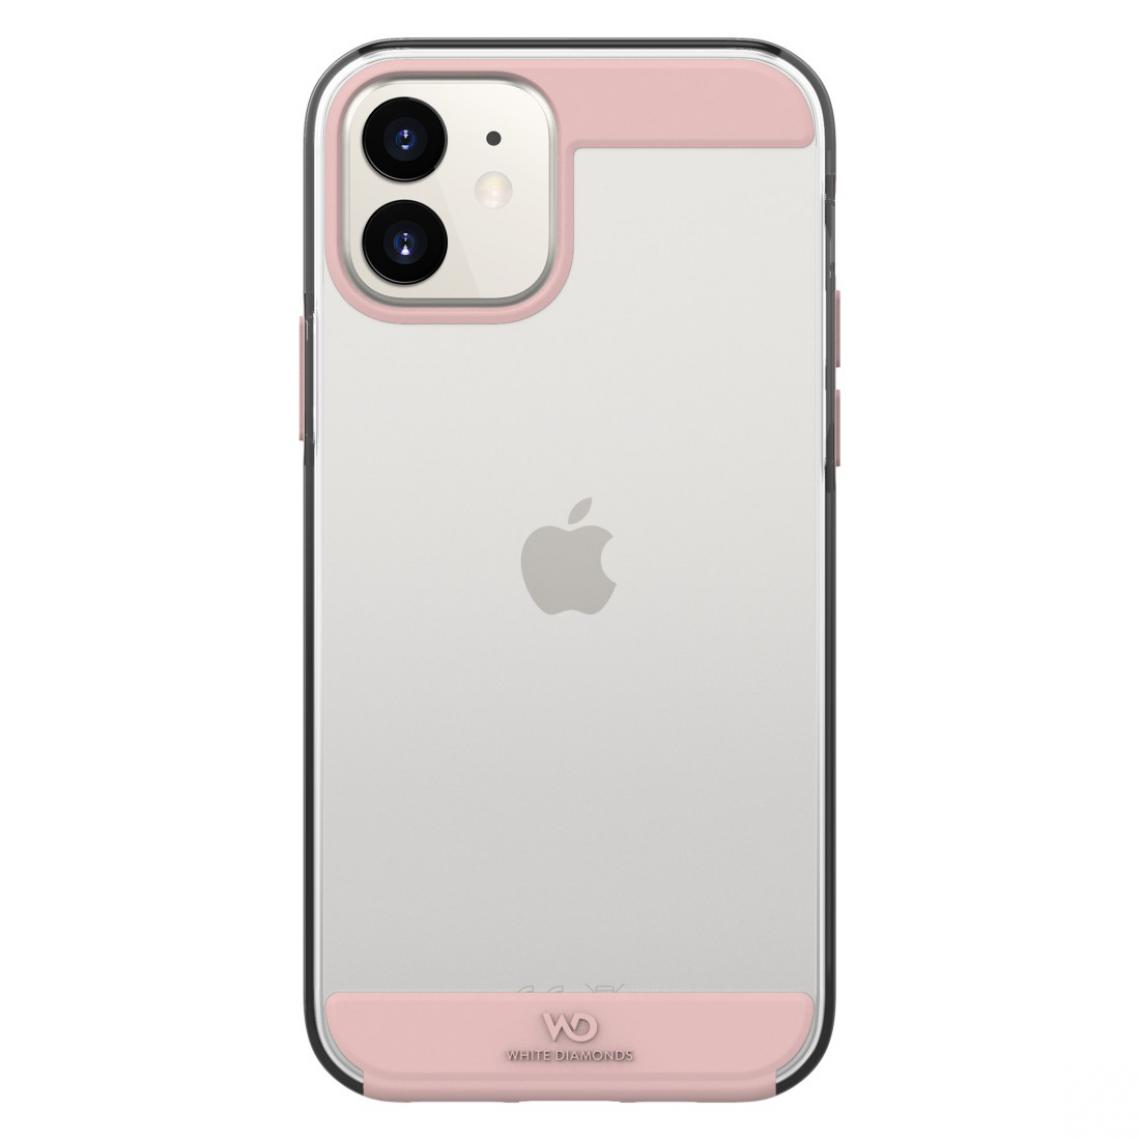 White Diamonds - Coque de protection "Innocence Clear" pour iPhone 12 mini, or rose - Coque, étui smartphone